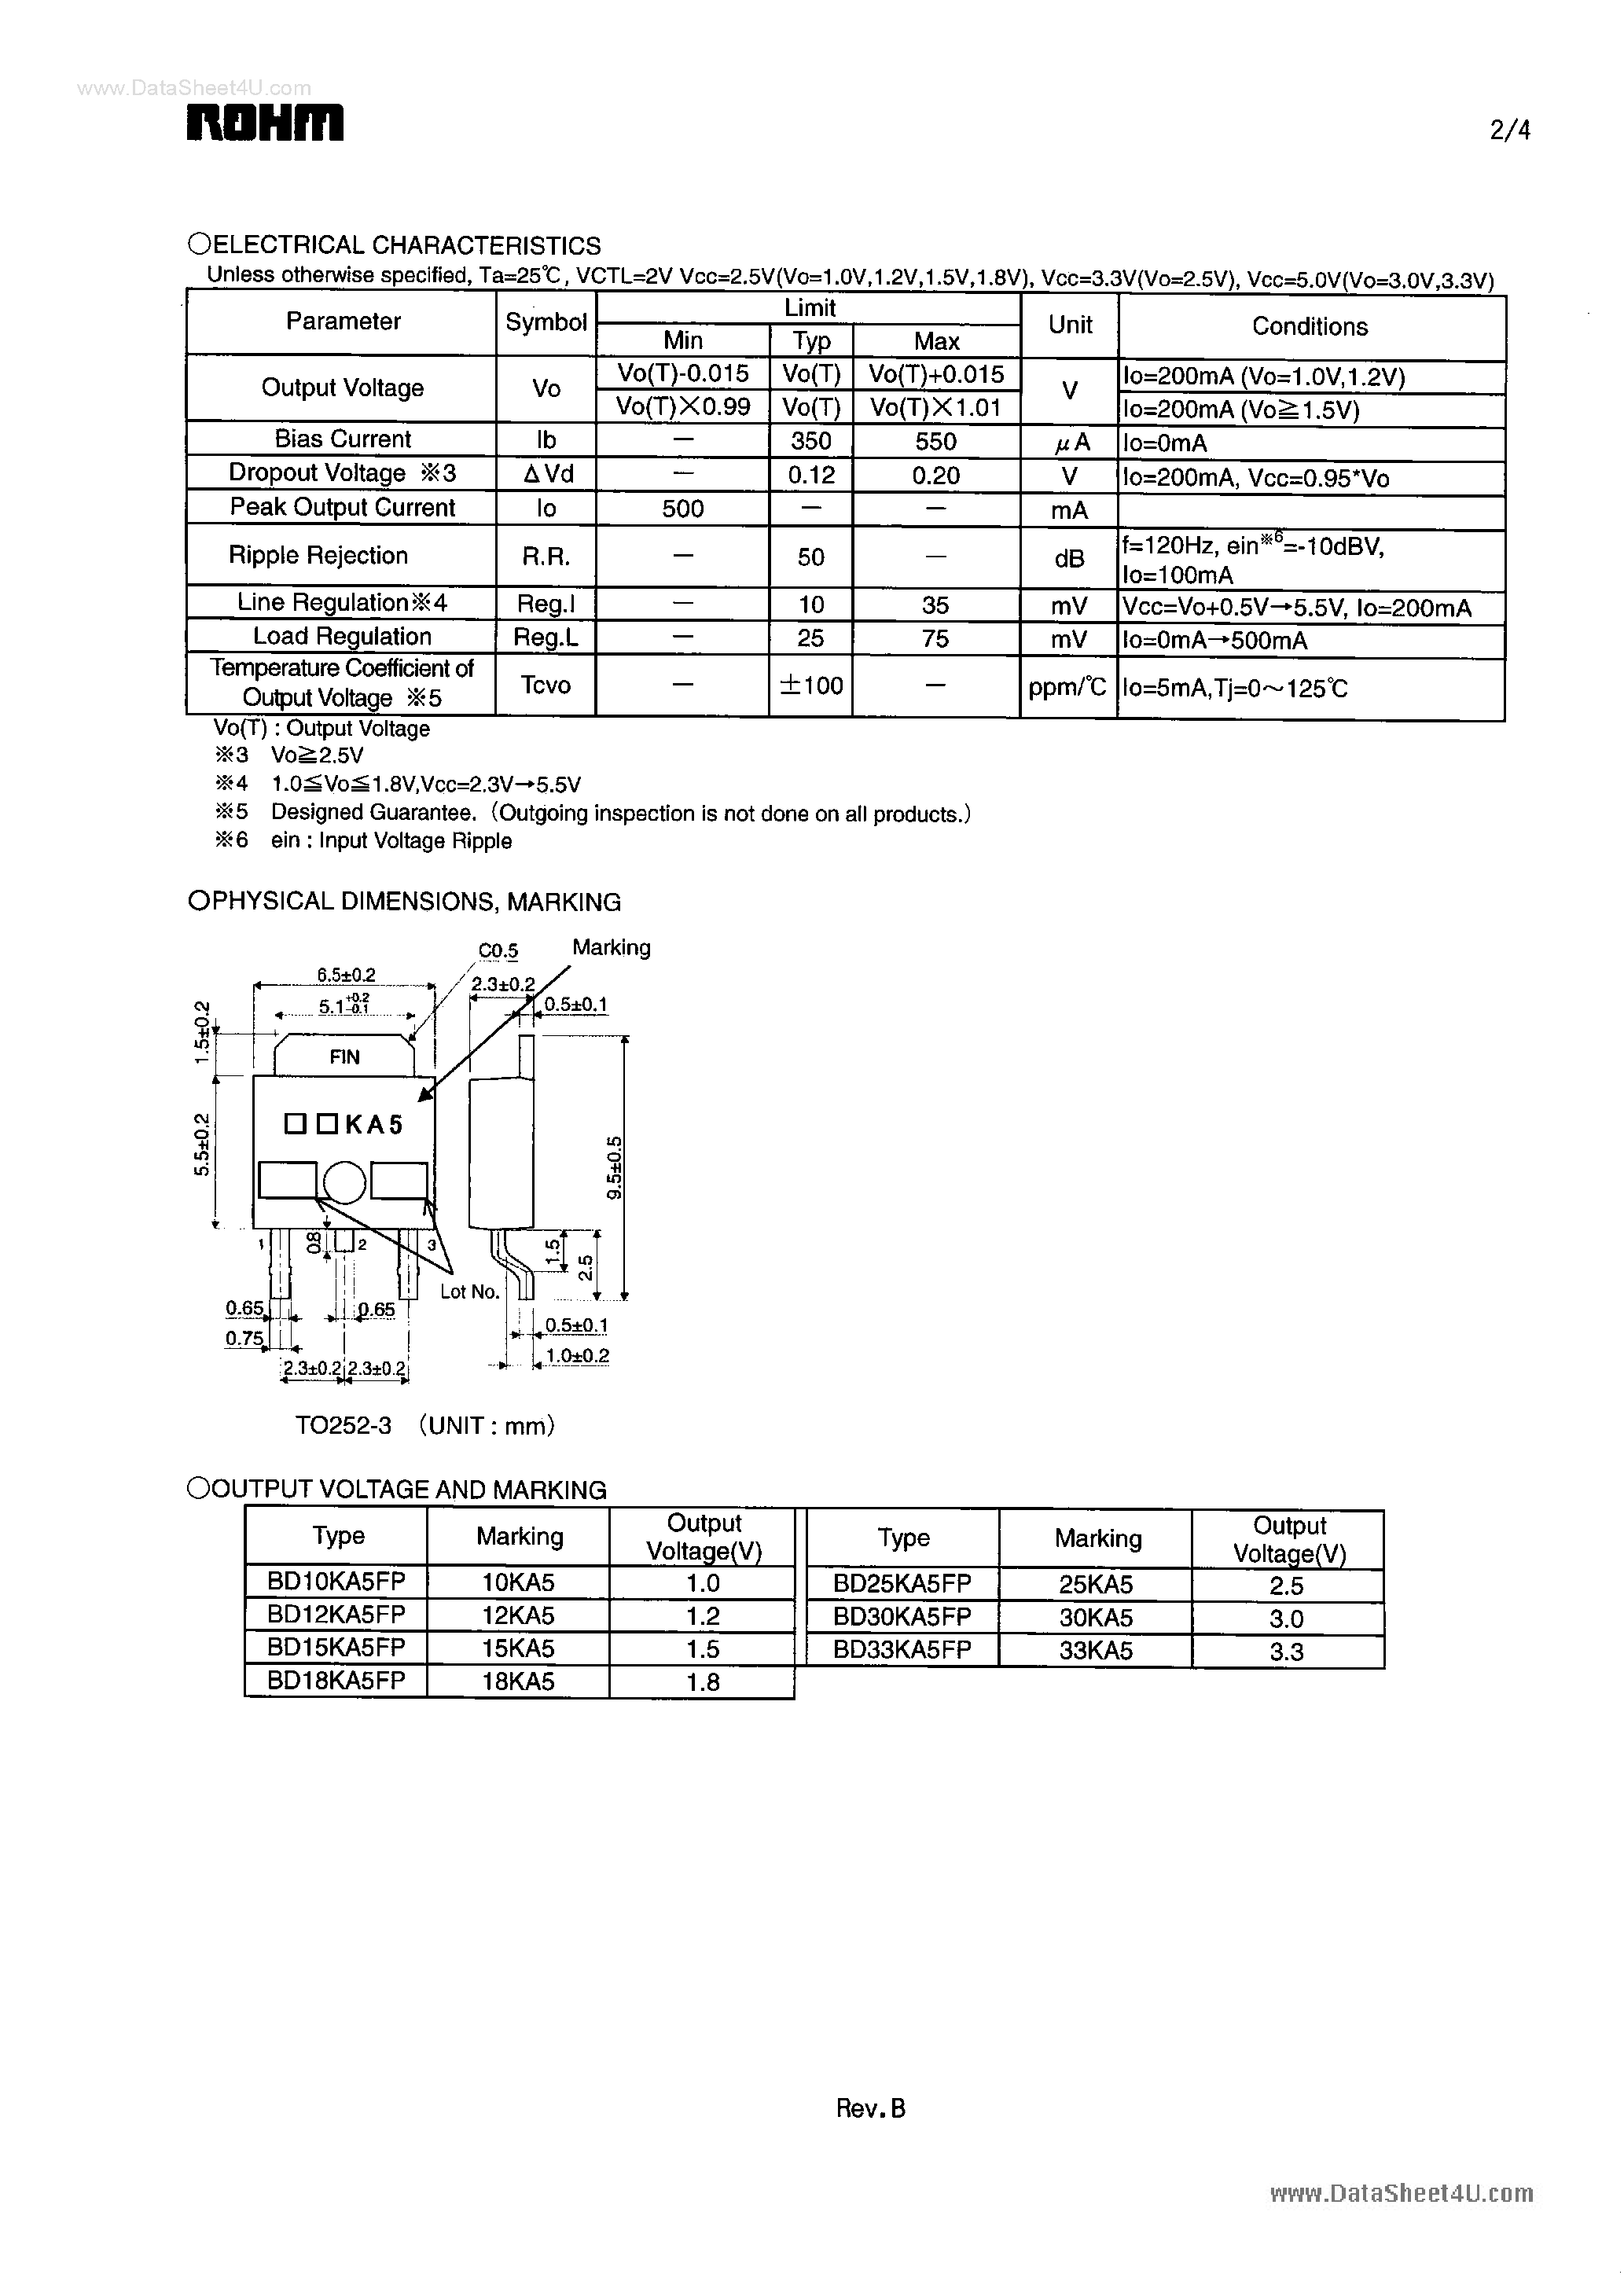 Datasheet BD10KA5FP - Low ESR Capacitor page 2